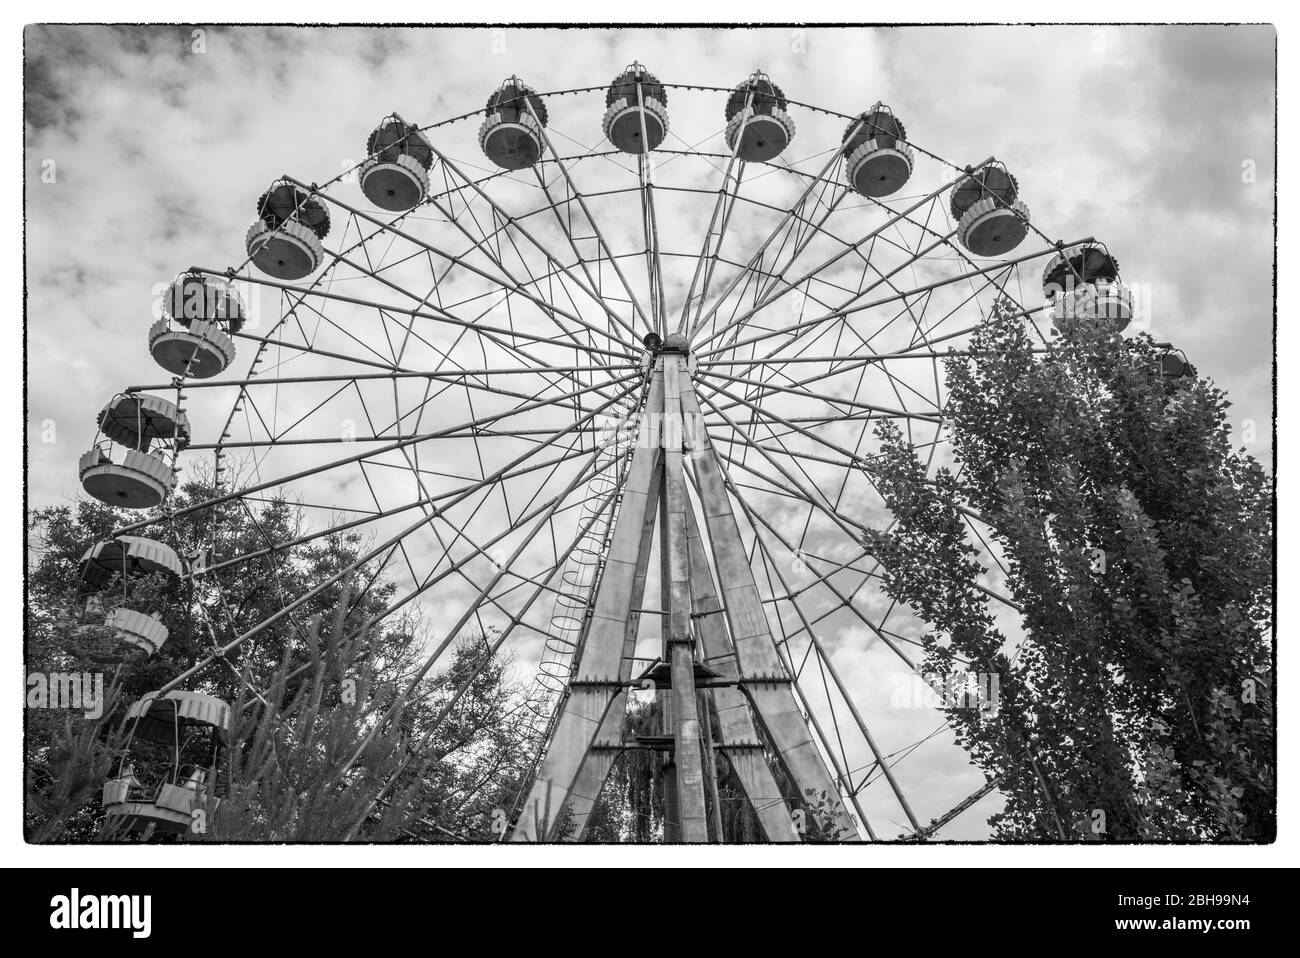 Armenia, Yeghegnadzor, parco divertimenti, ruota panoramica Ferris Foto Stock